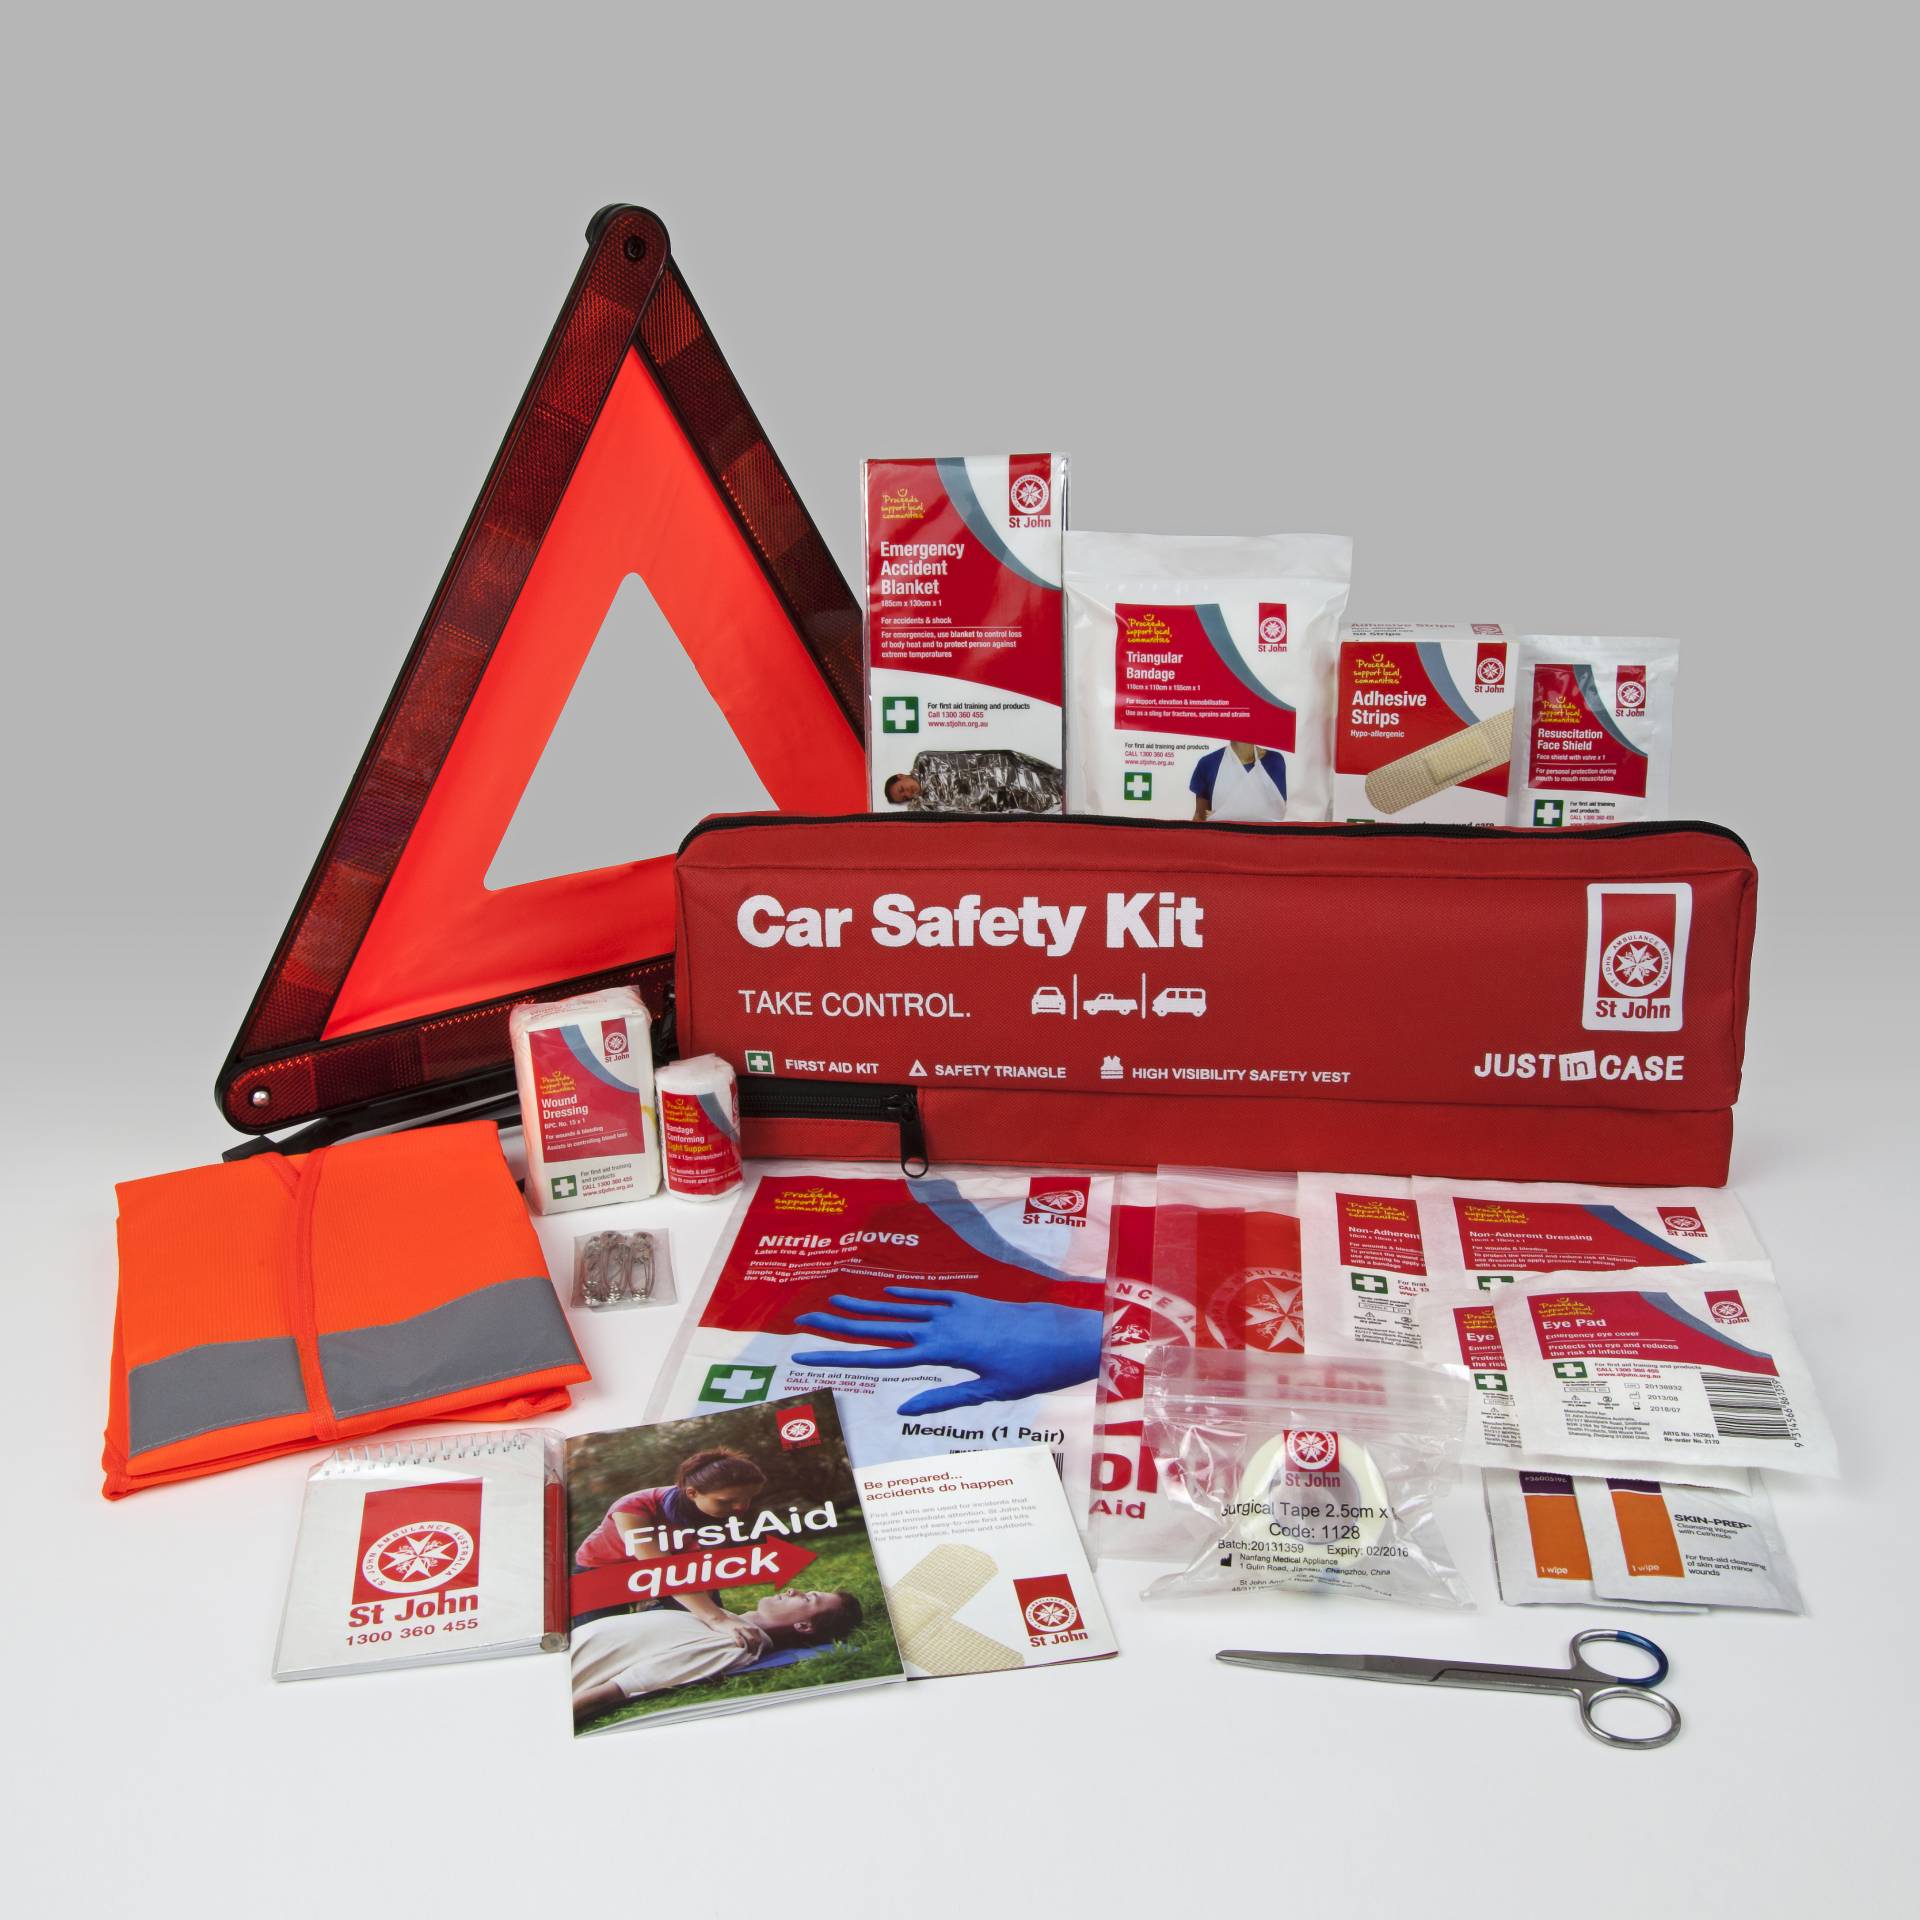 https://www.stjohnqld.com.au/app/uploads/2022/05/600203_Car_Safety_Kit_LS_c.jpg